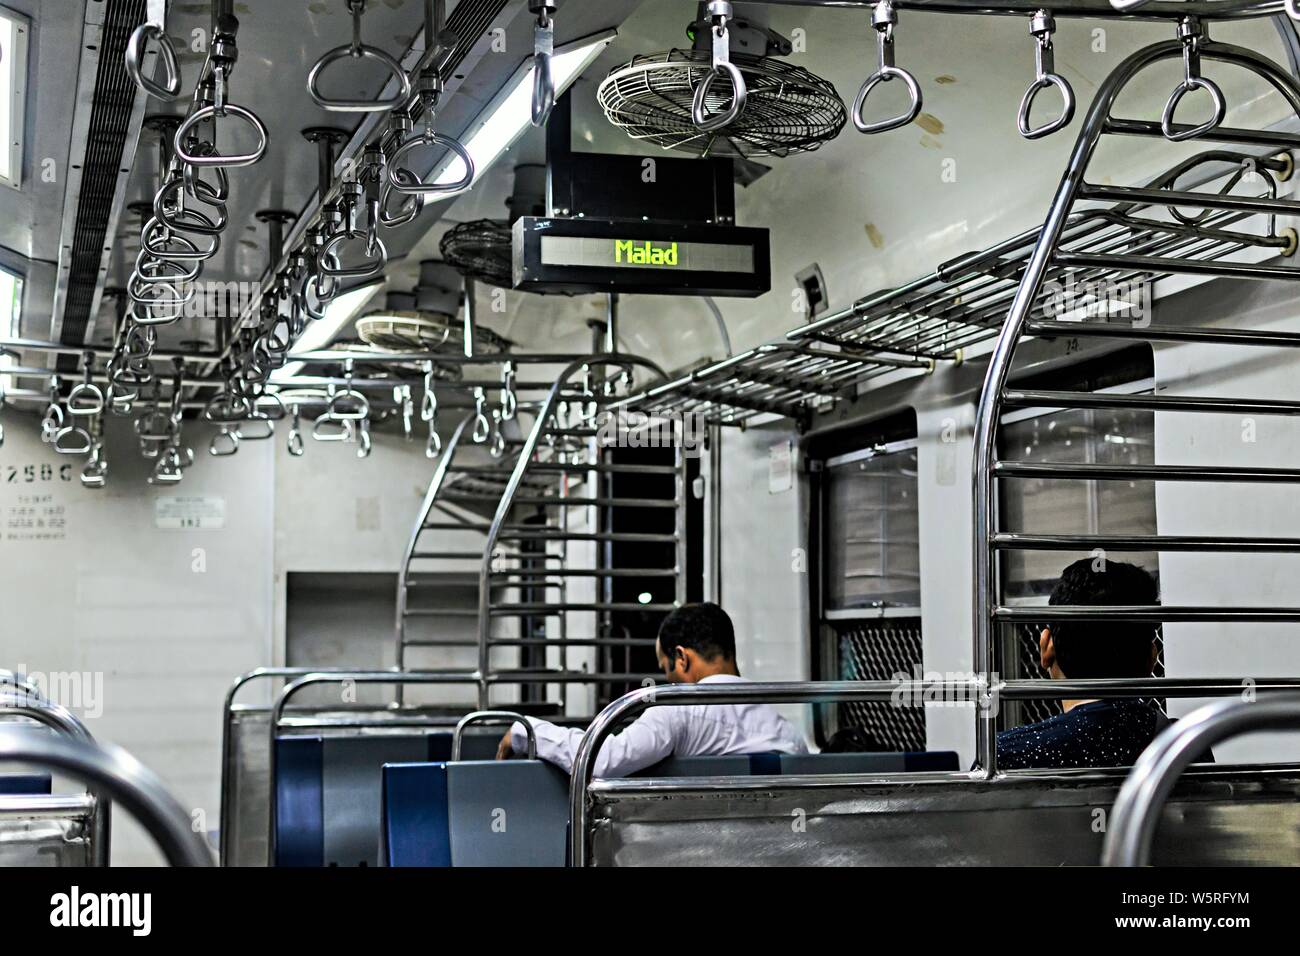 Anzeige im Zug Malad Bahnhof Mumbai Maharashtra Indien Asien Stockfoto